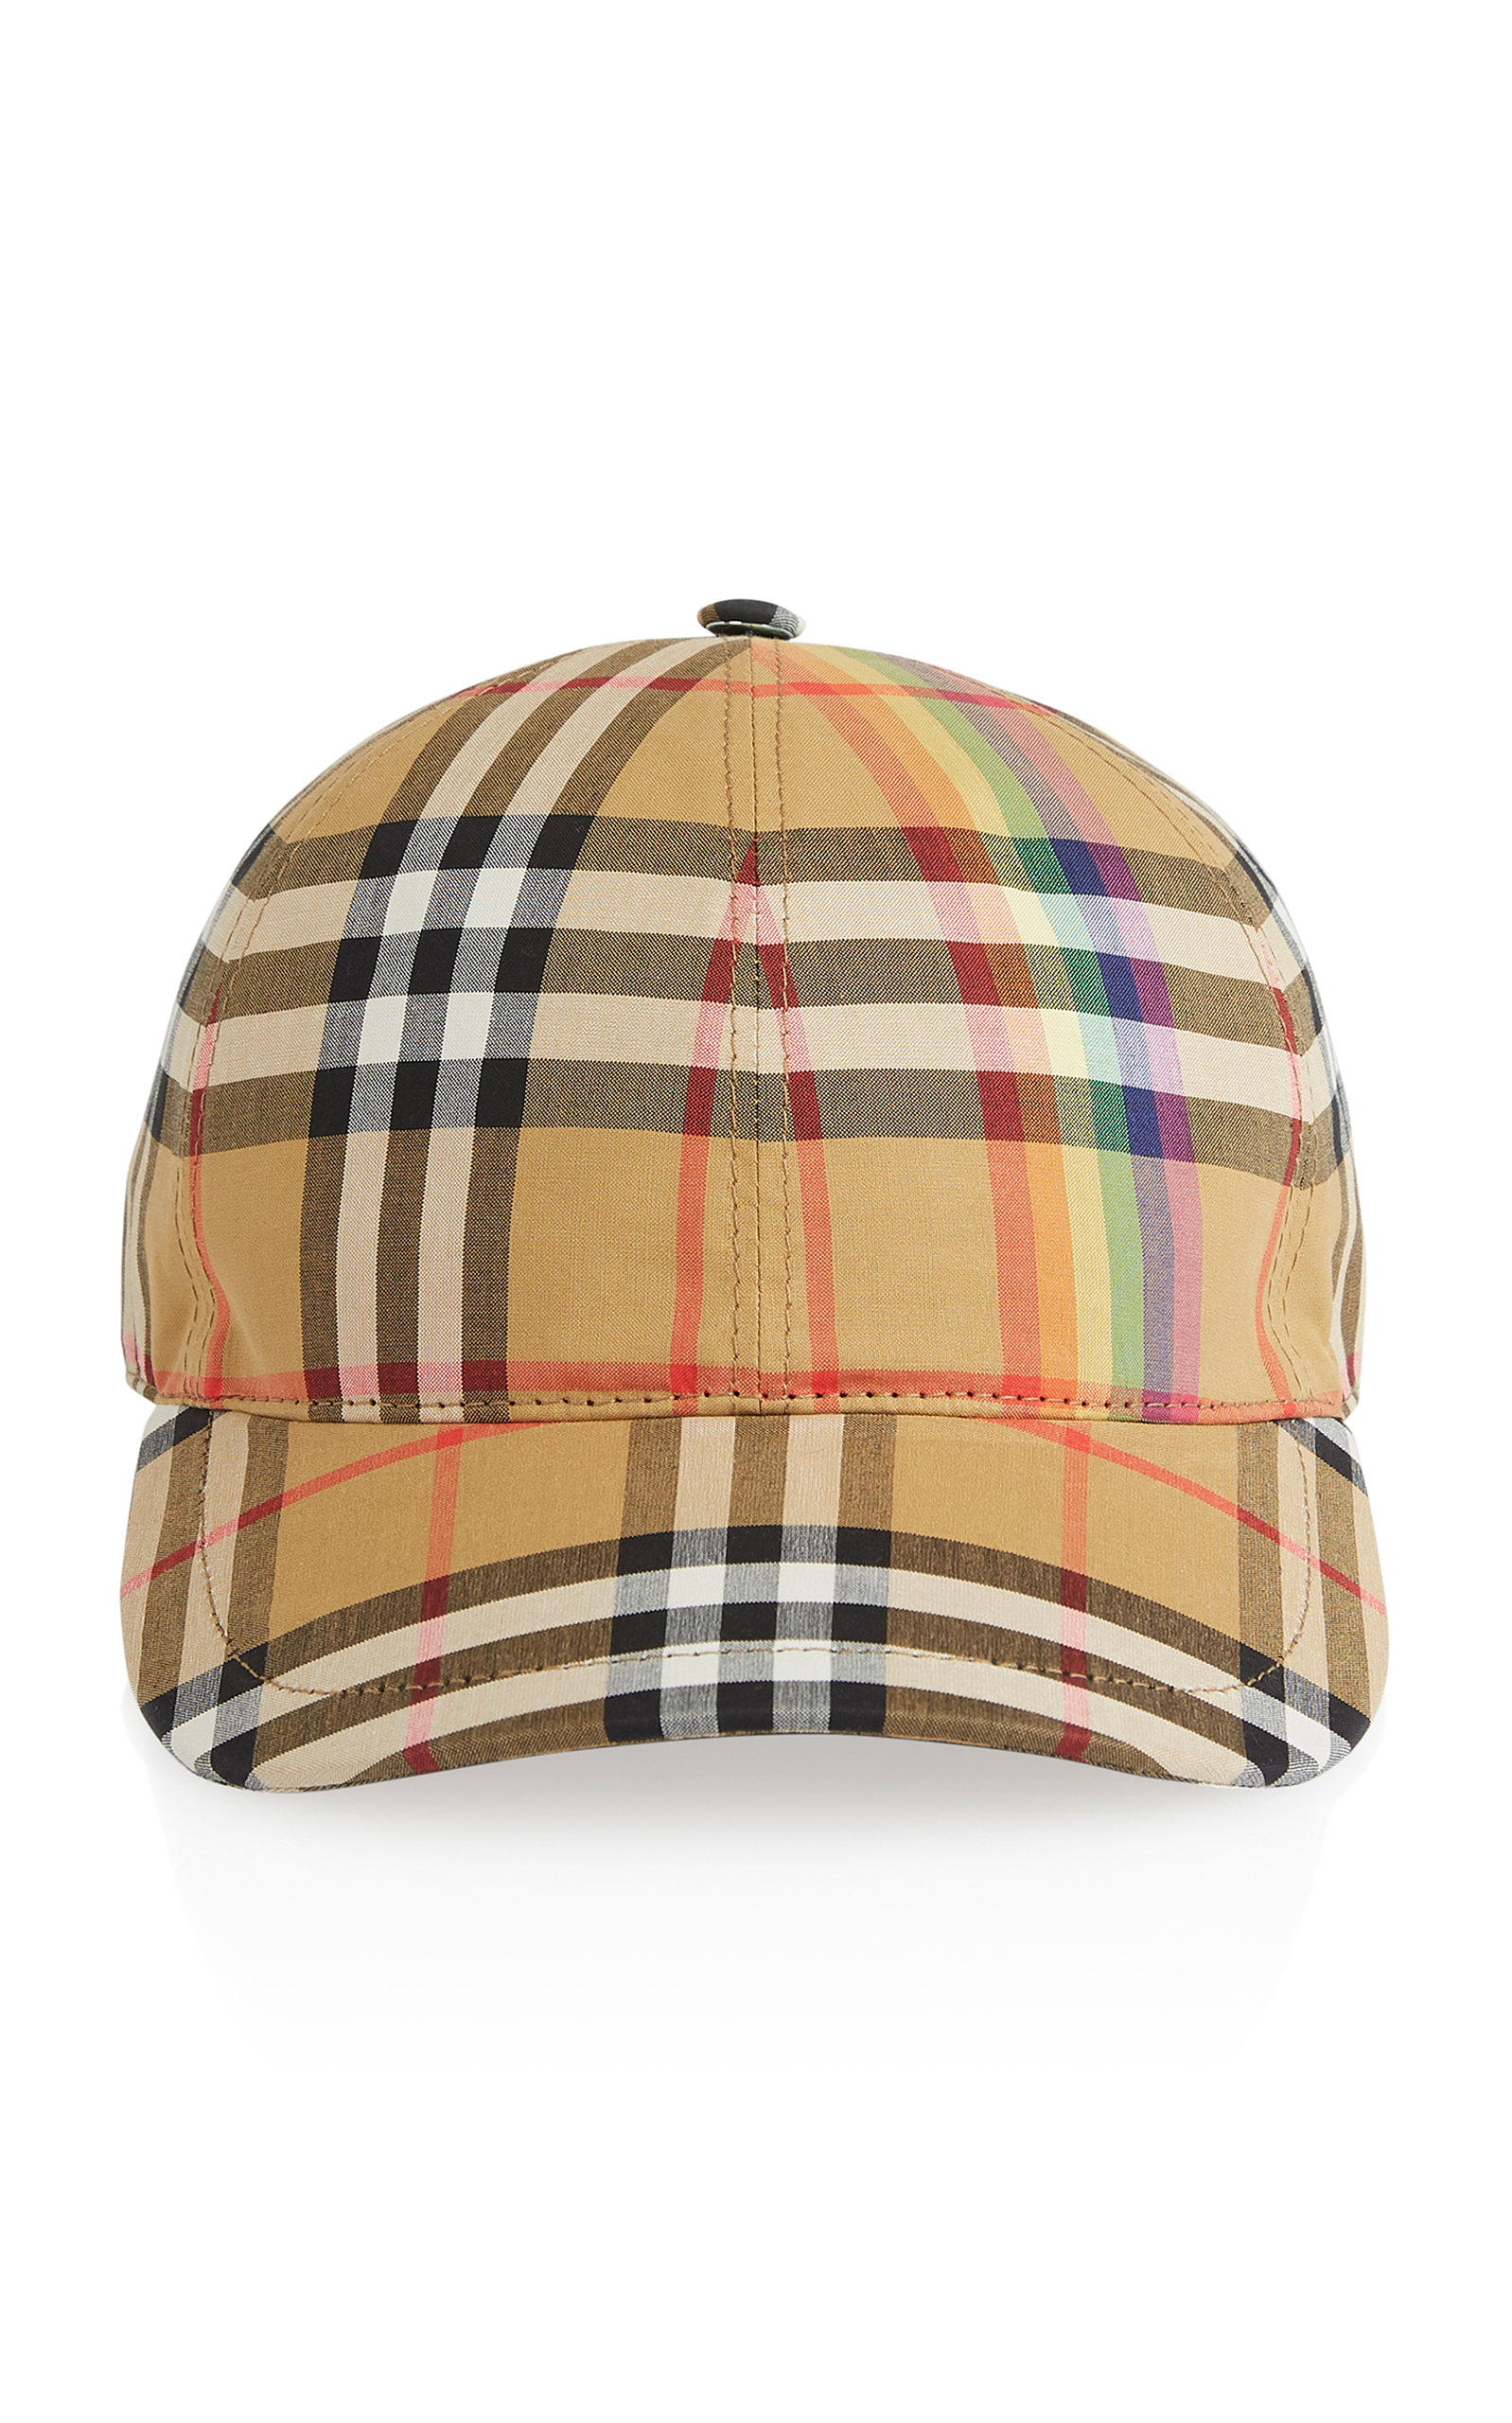 burberry bucket hat rainbow